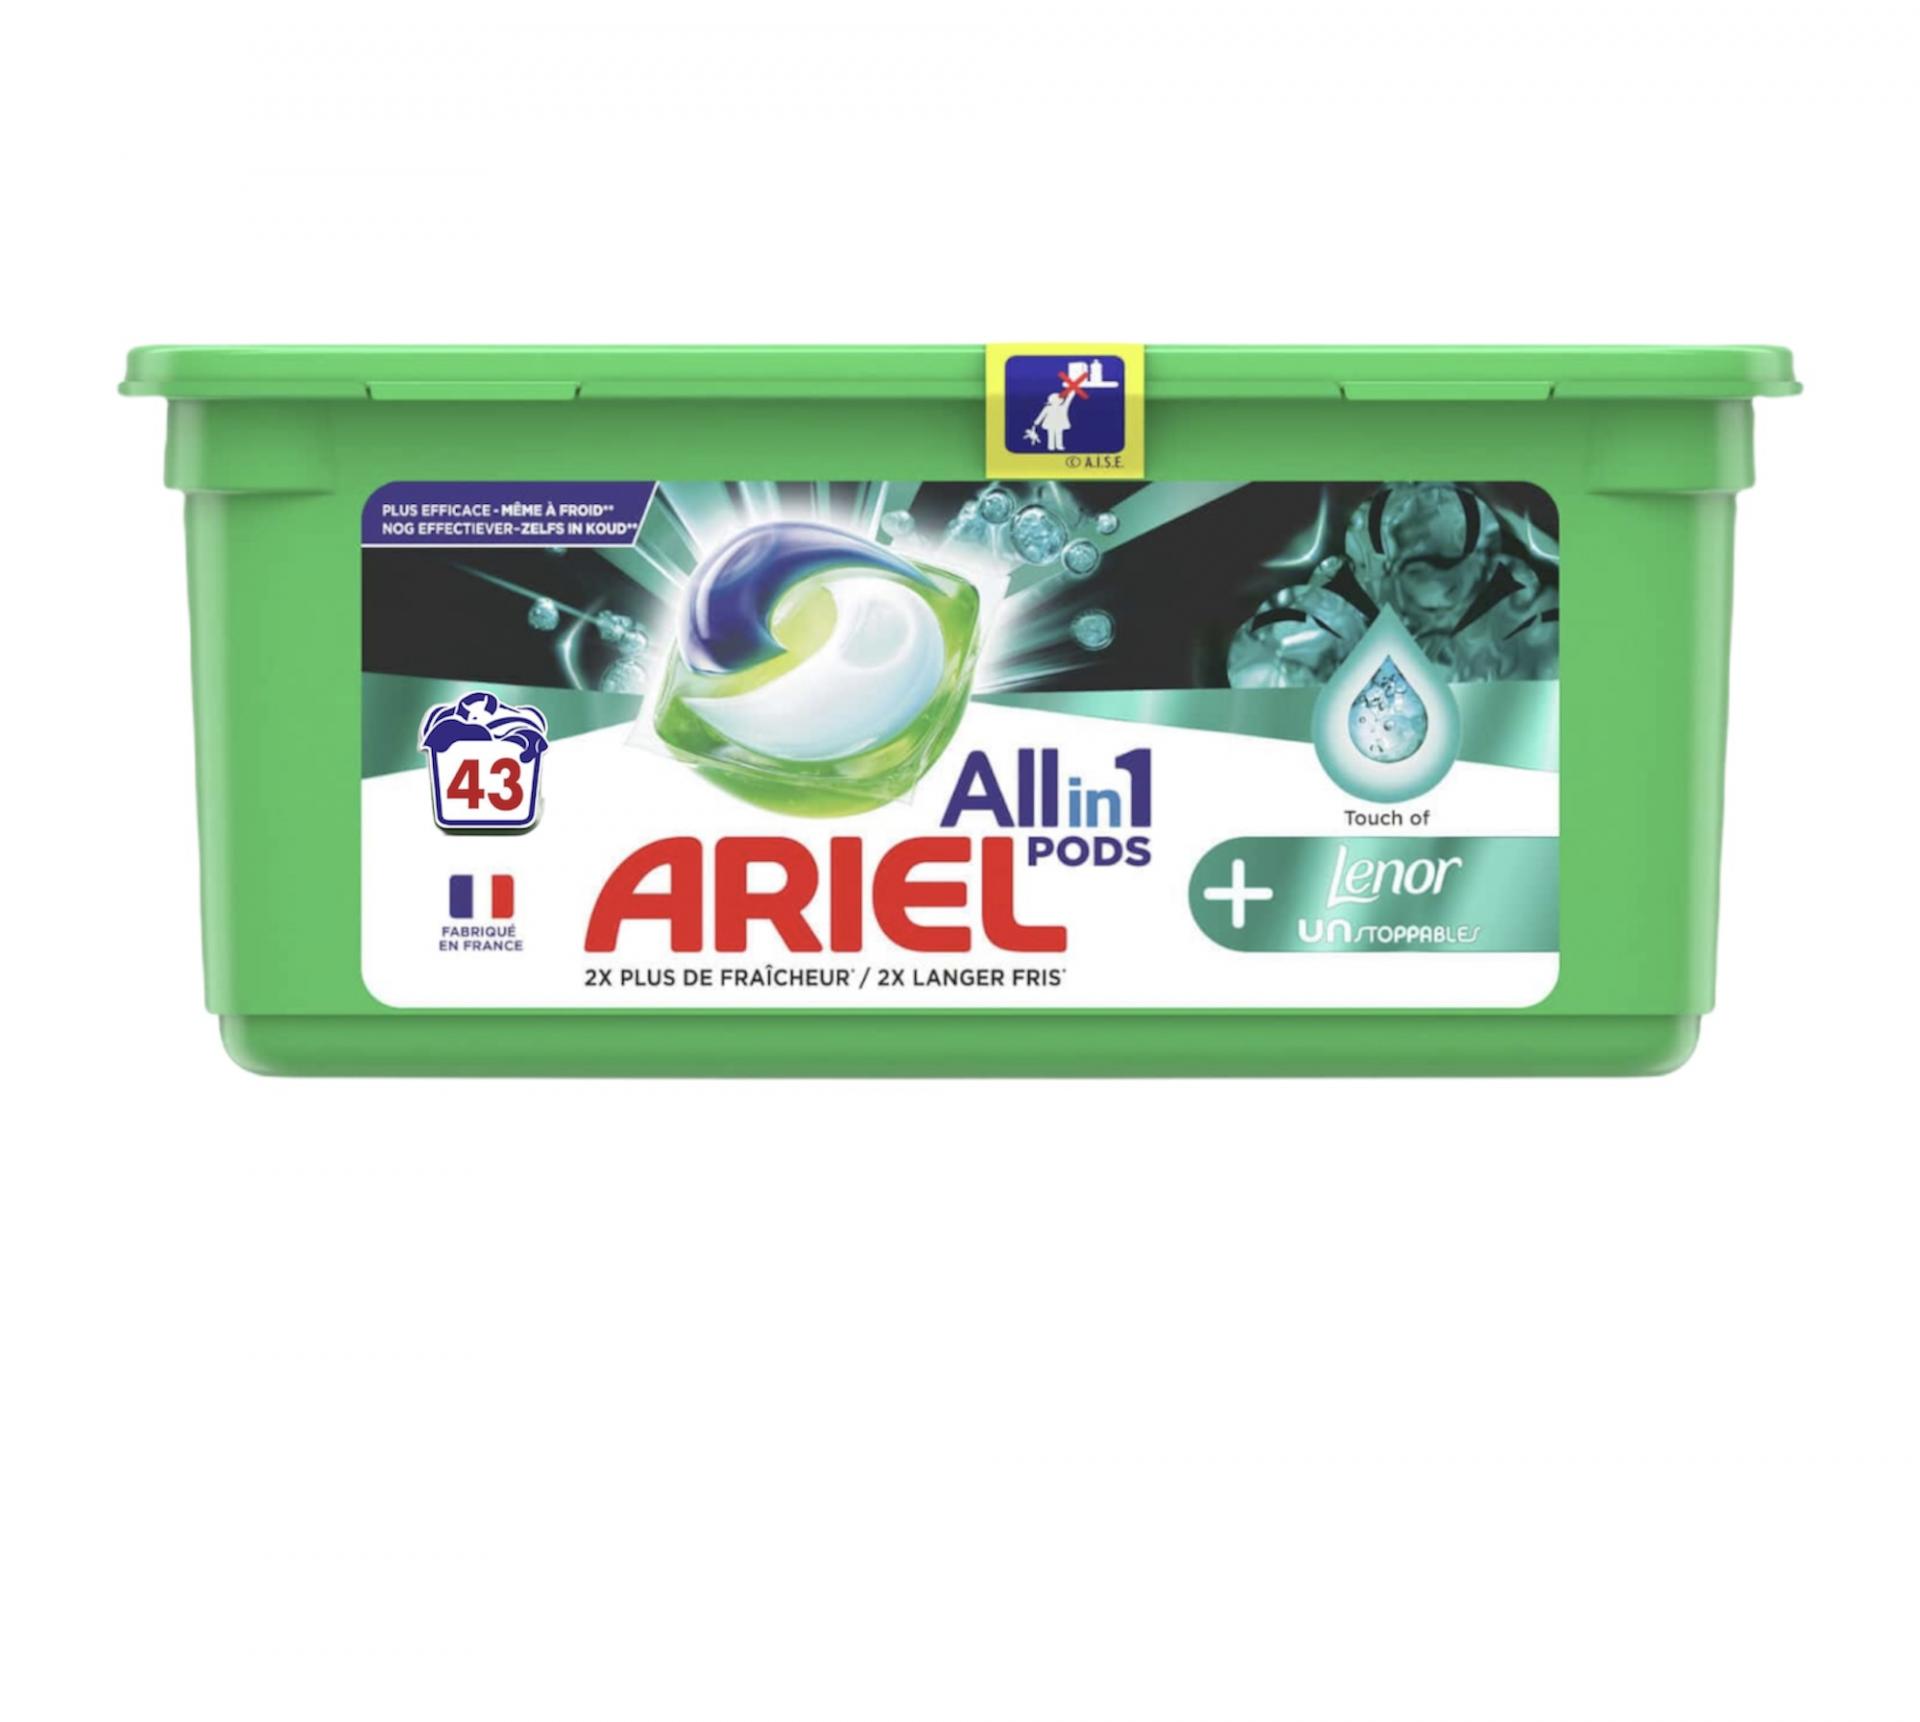 Ariel Pods - All in 1 - ACTIVE ODOR DEFENSE - Febreze - 43 Capsules